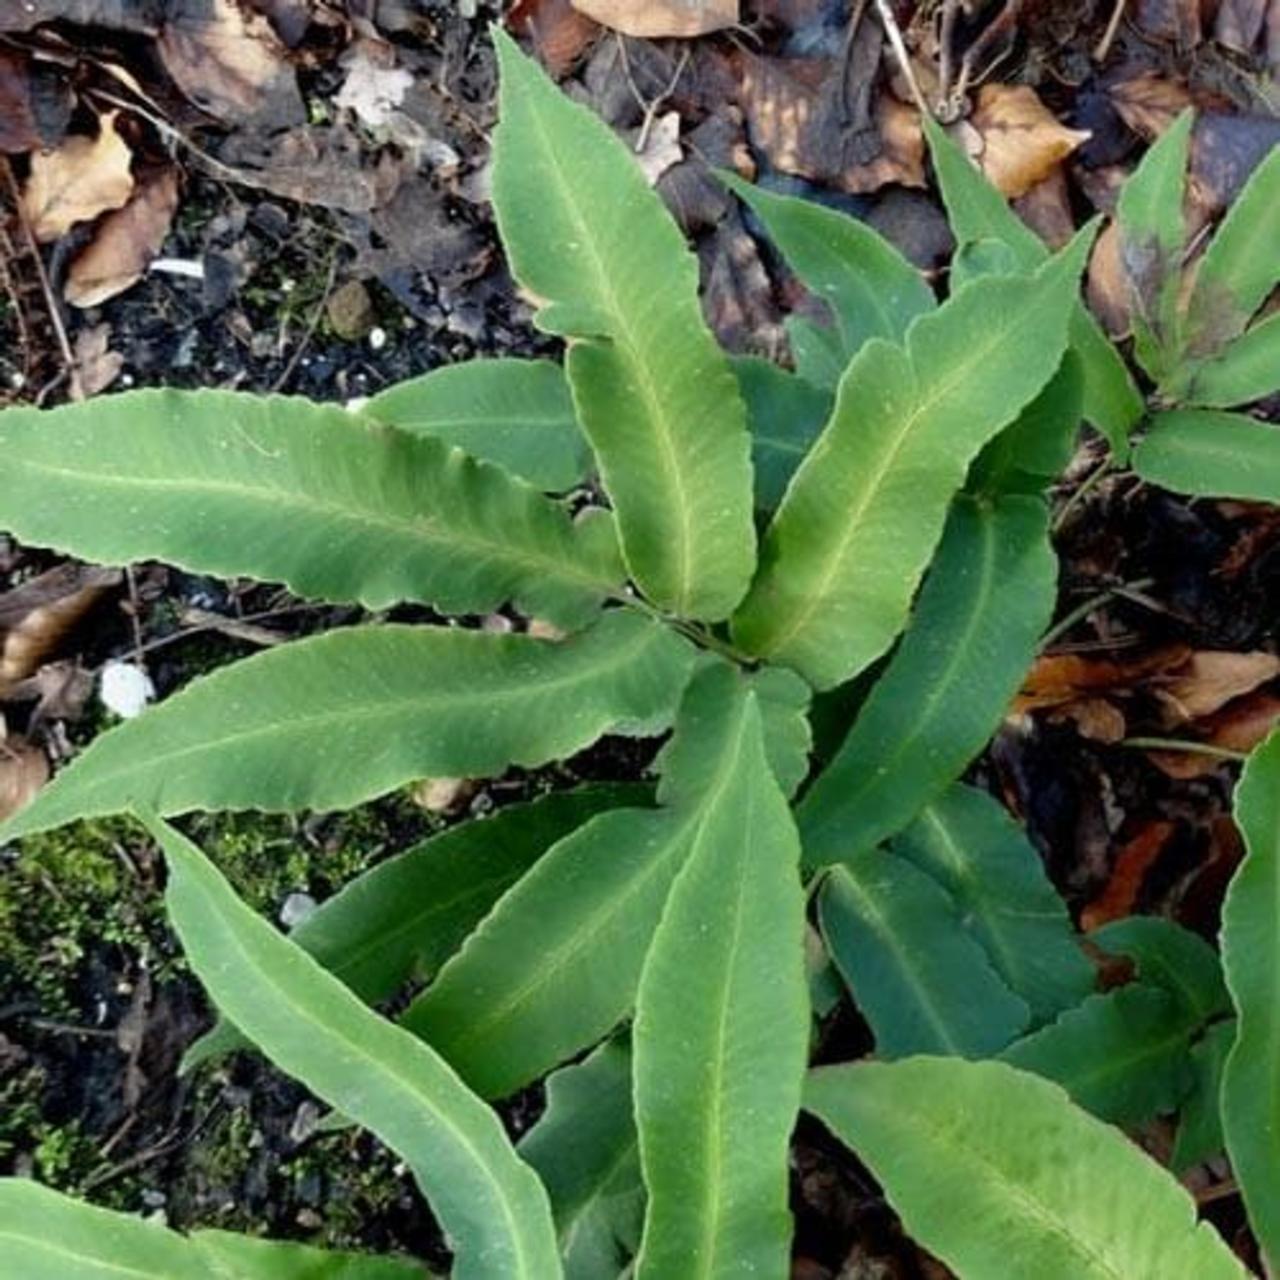 Dryopteris sieboldii plant